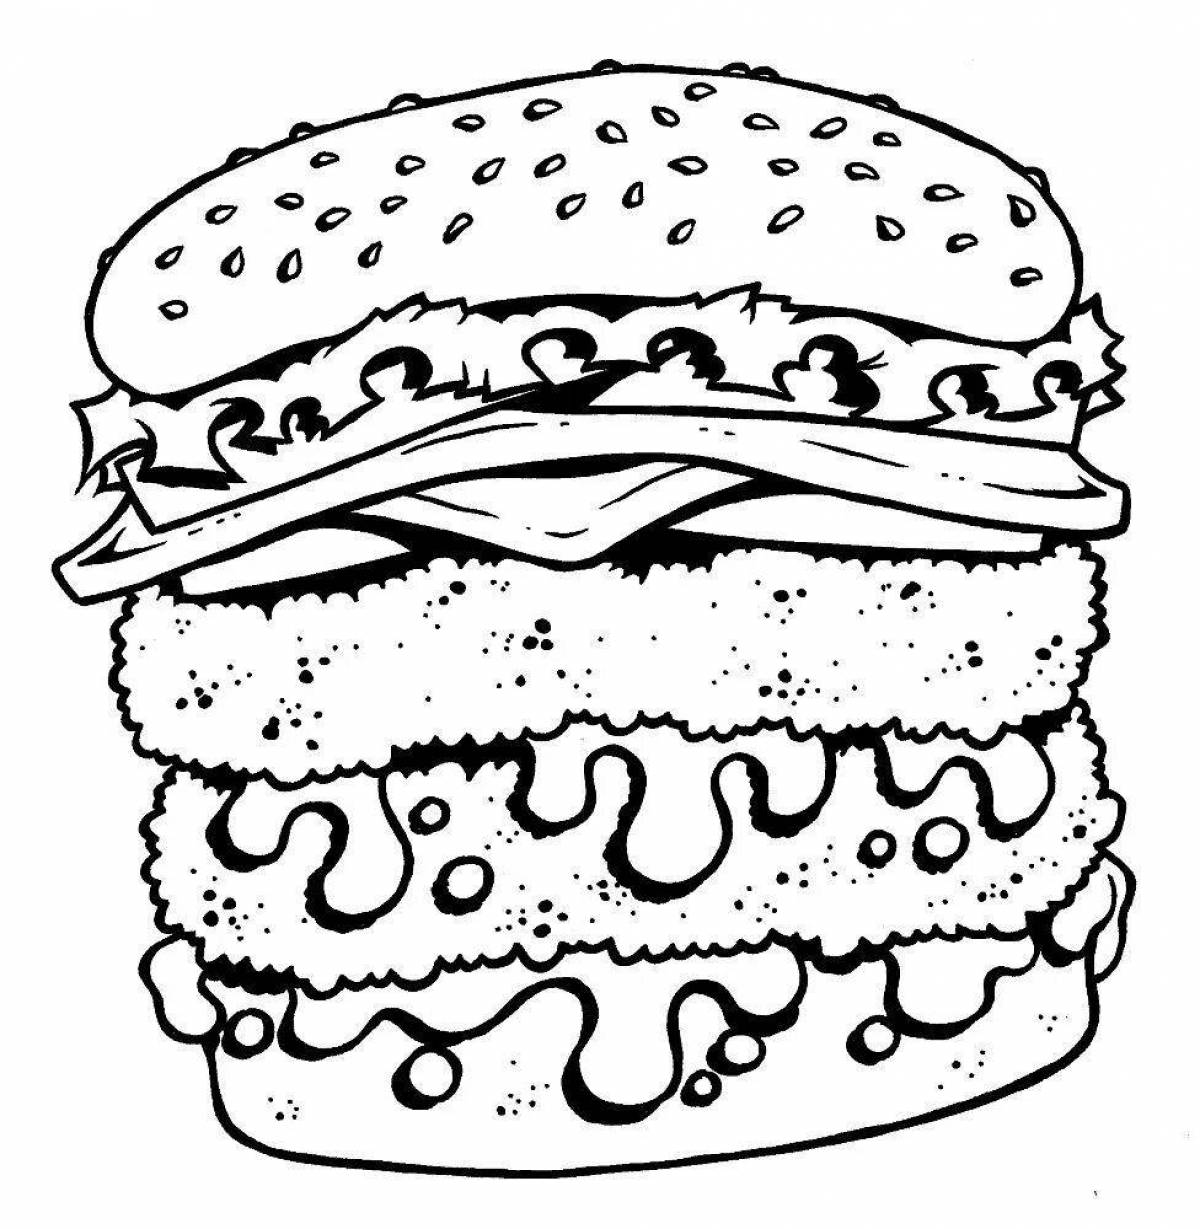 Incredible burger coloring book for kids